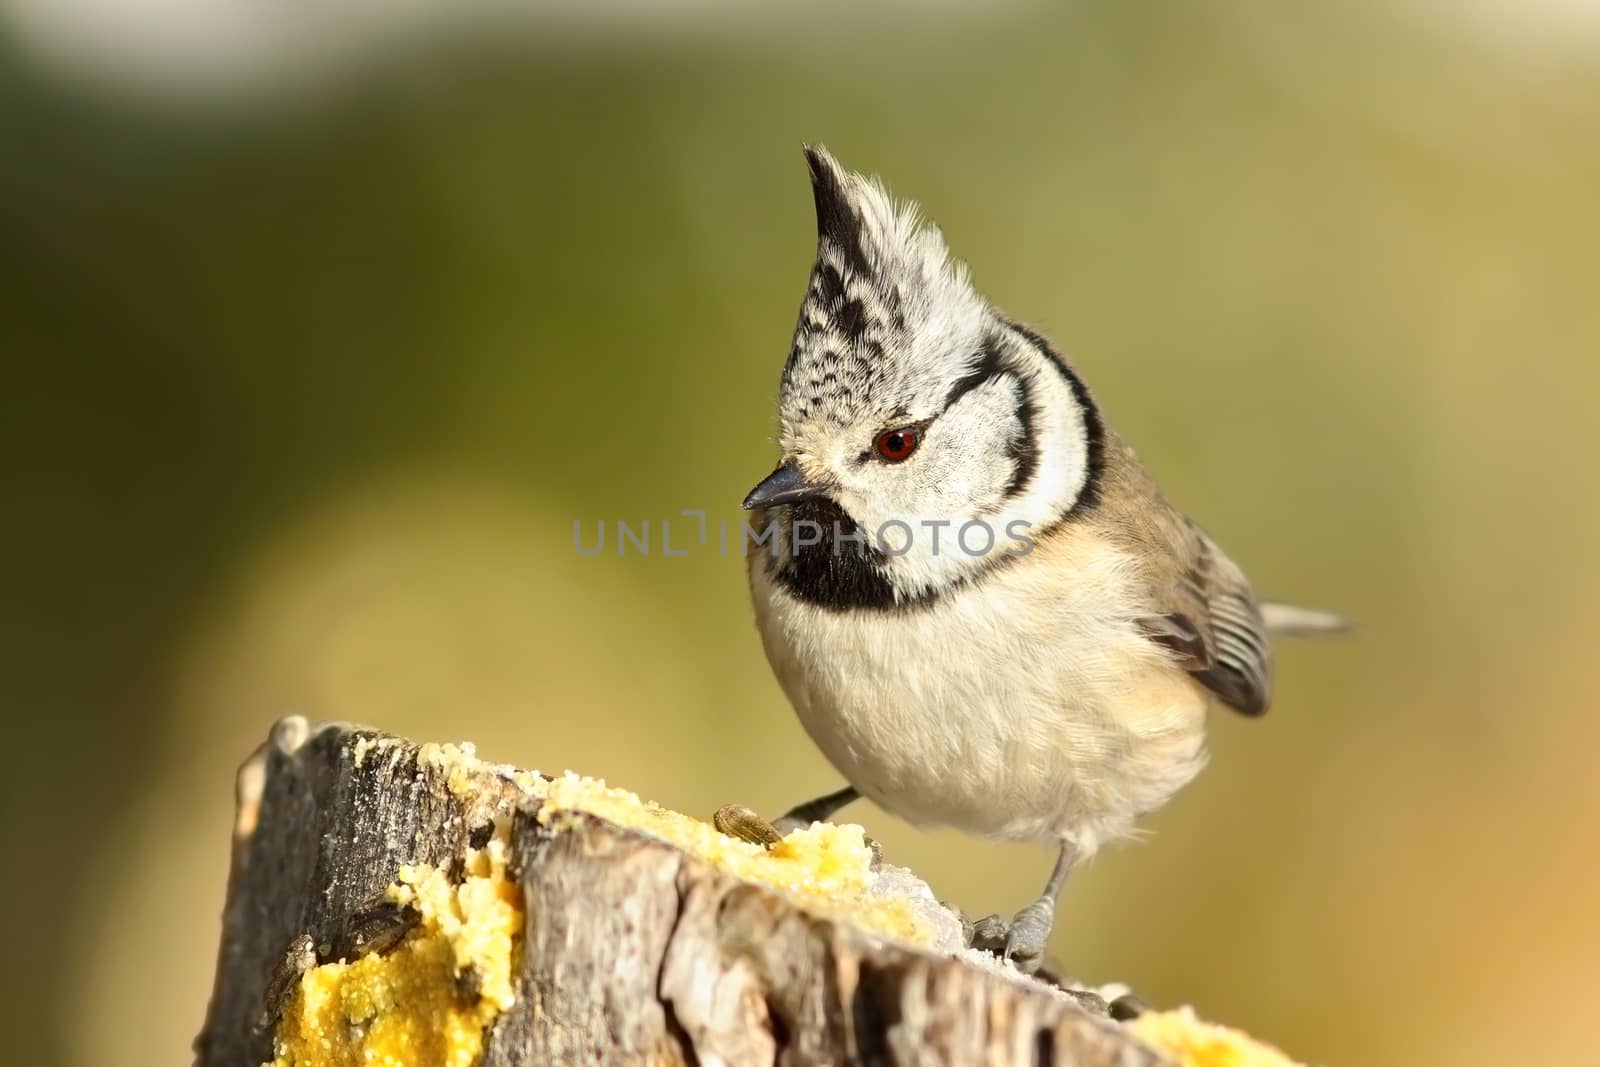 cute garden bird perched on wooden stump ( Lophophanes cristatus - the european crested tit )